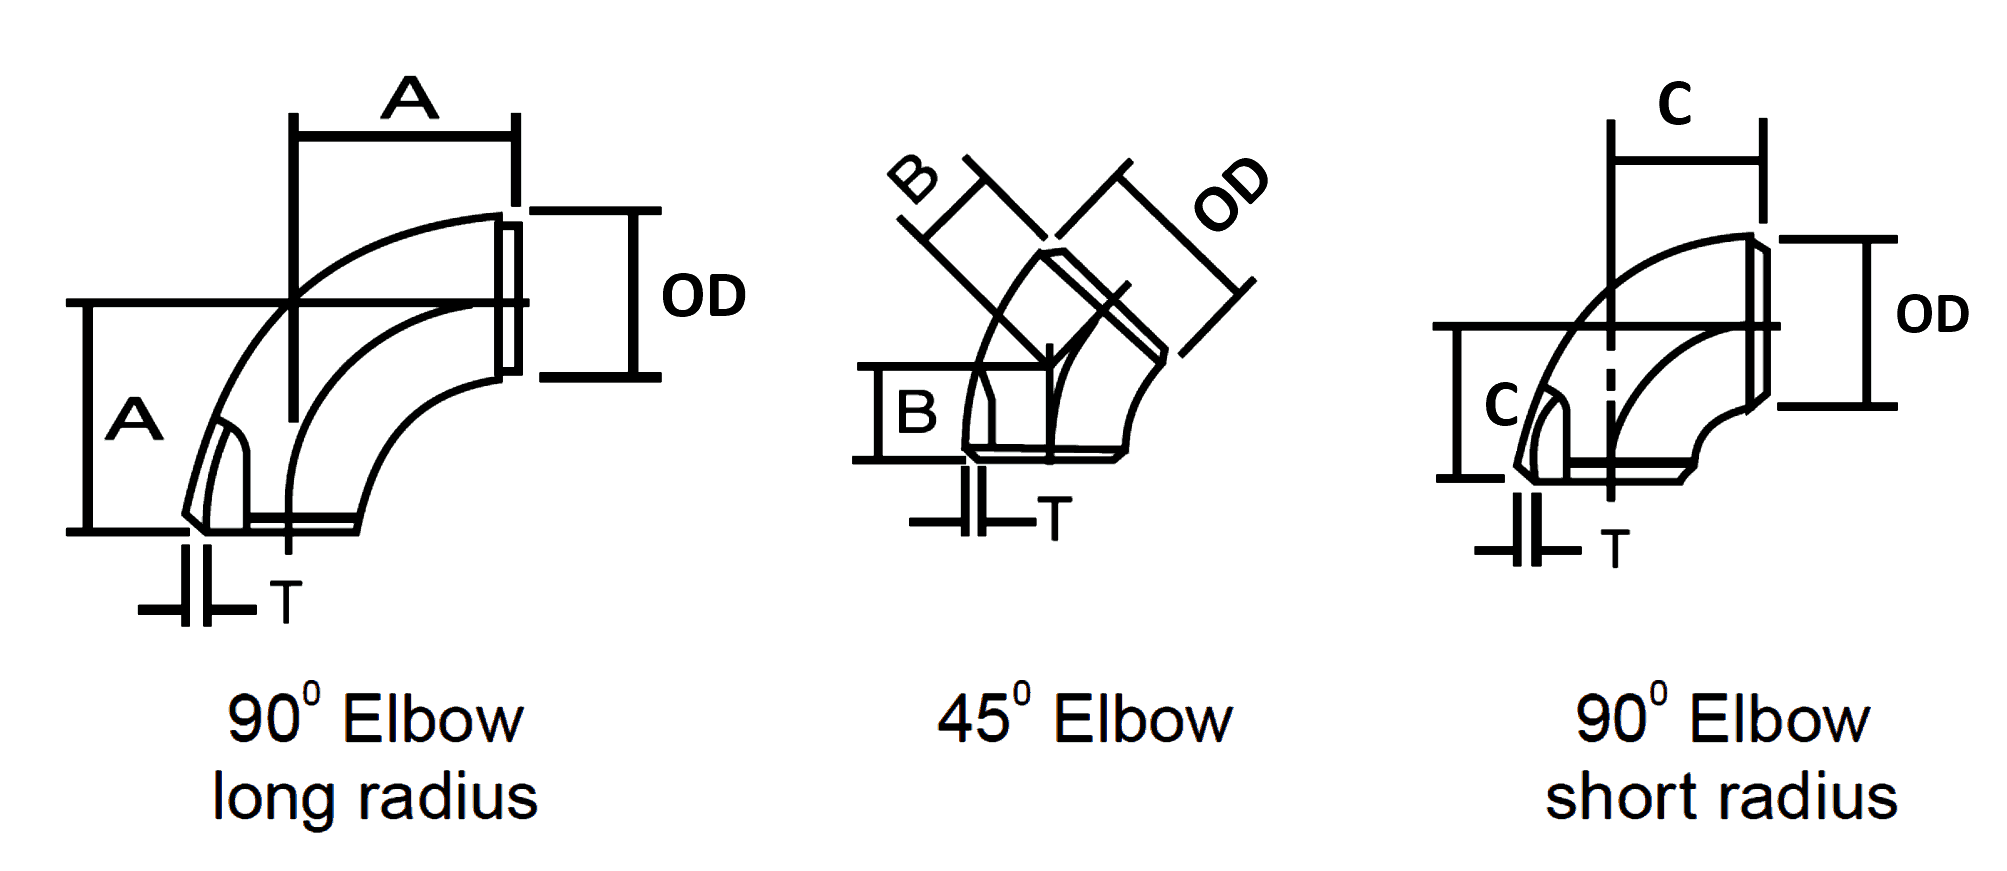 long radius elbow dimensions